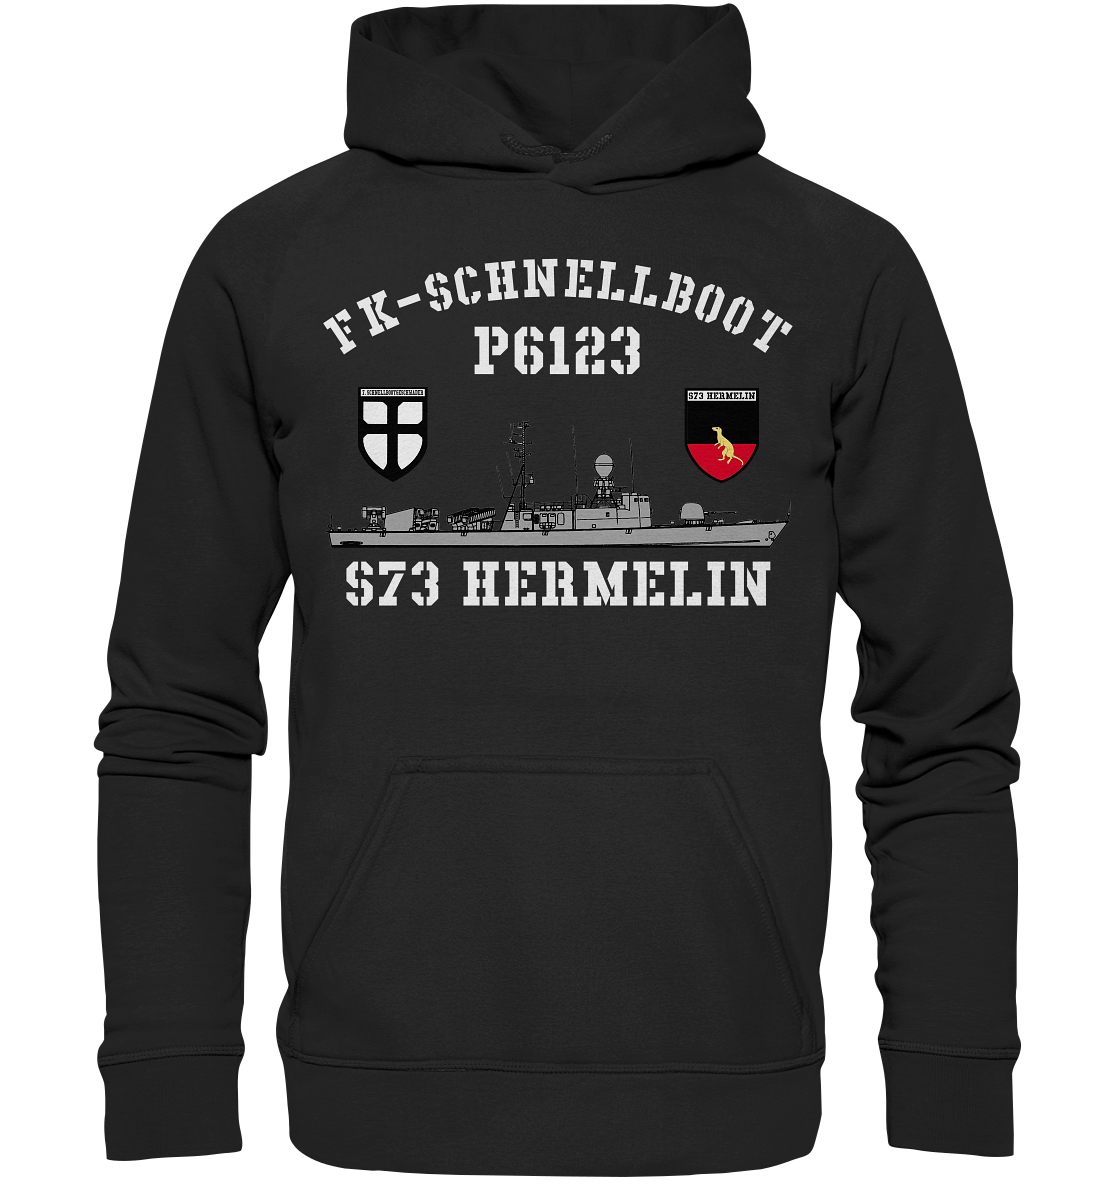 P6123 S73 HERMELIN 7.SG - Basic Unisex Hoodie